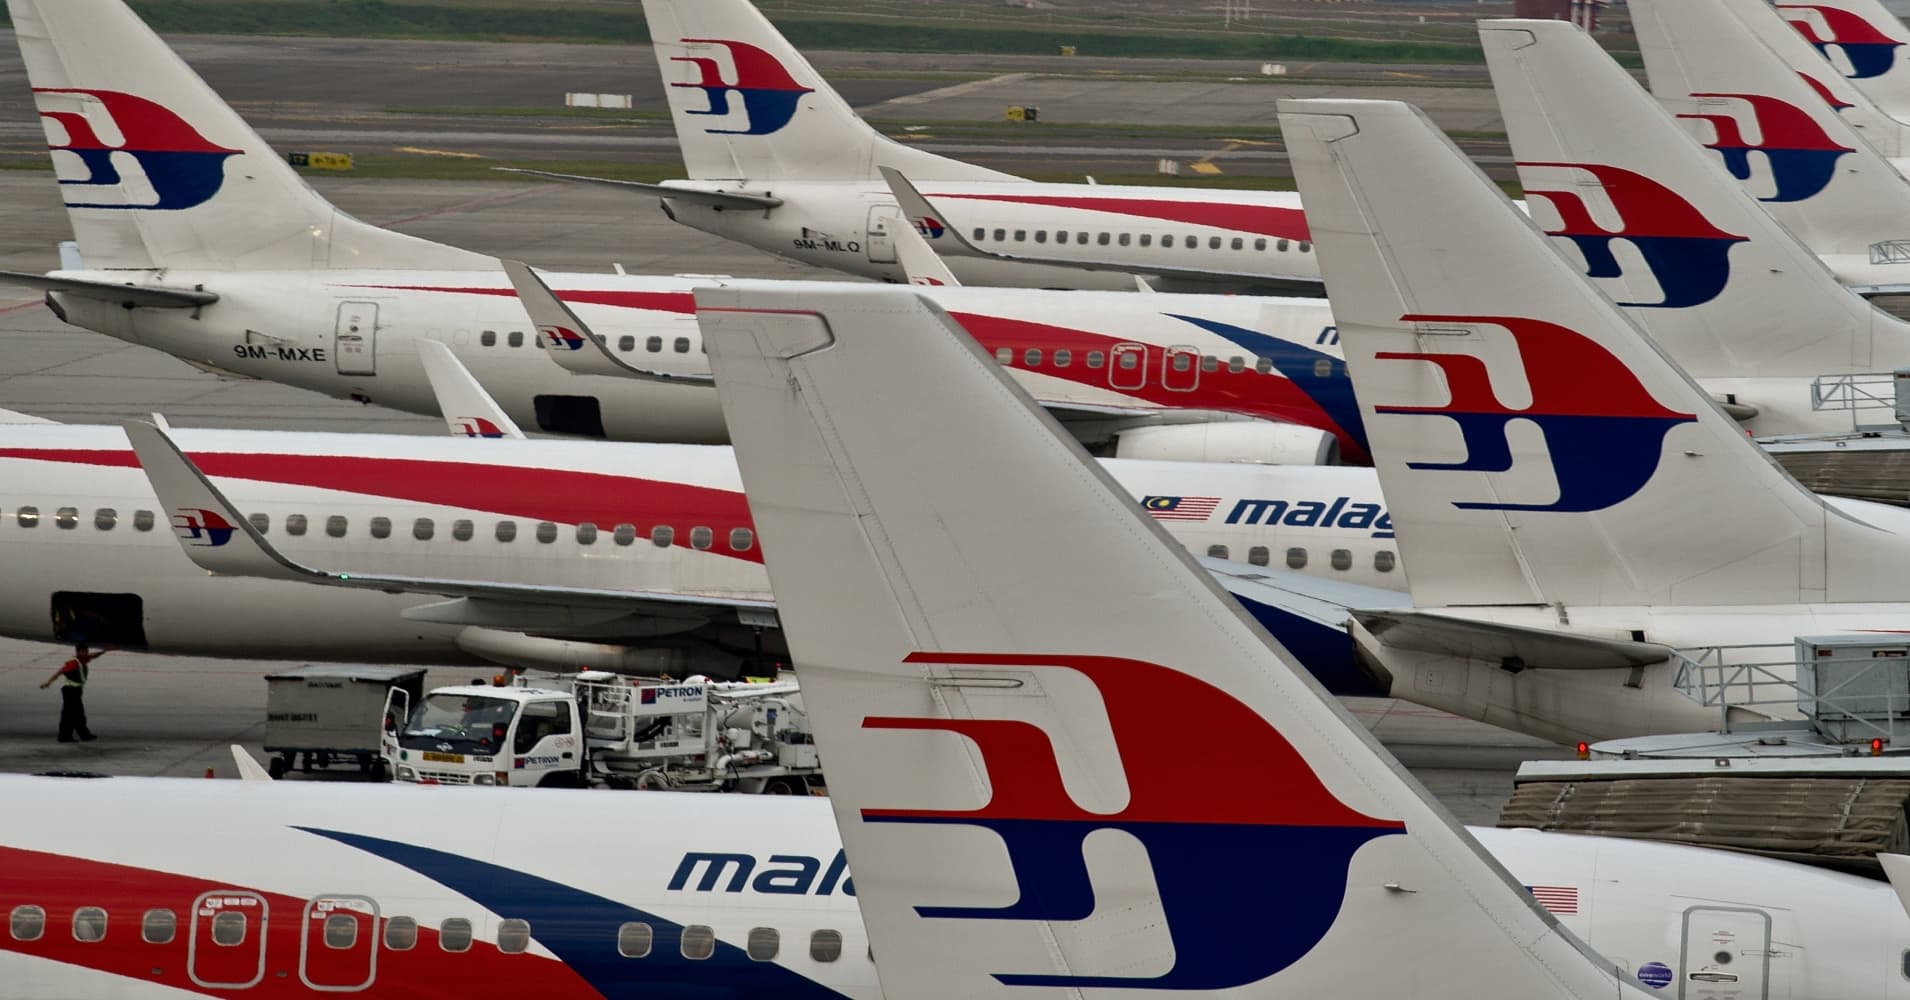 Air France’s strike hints at bad news for Malaysia Air